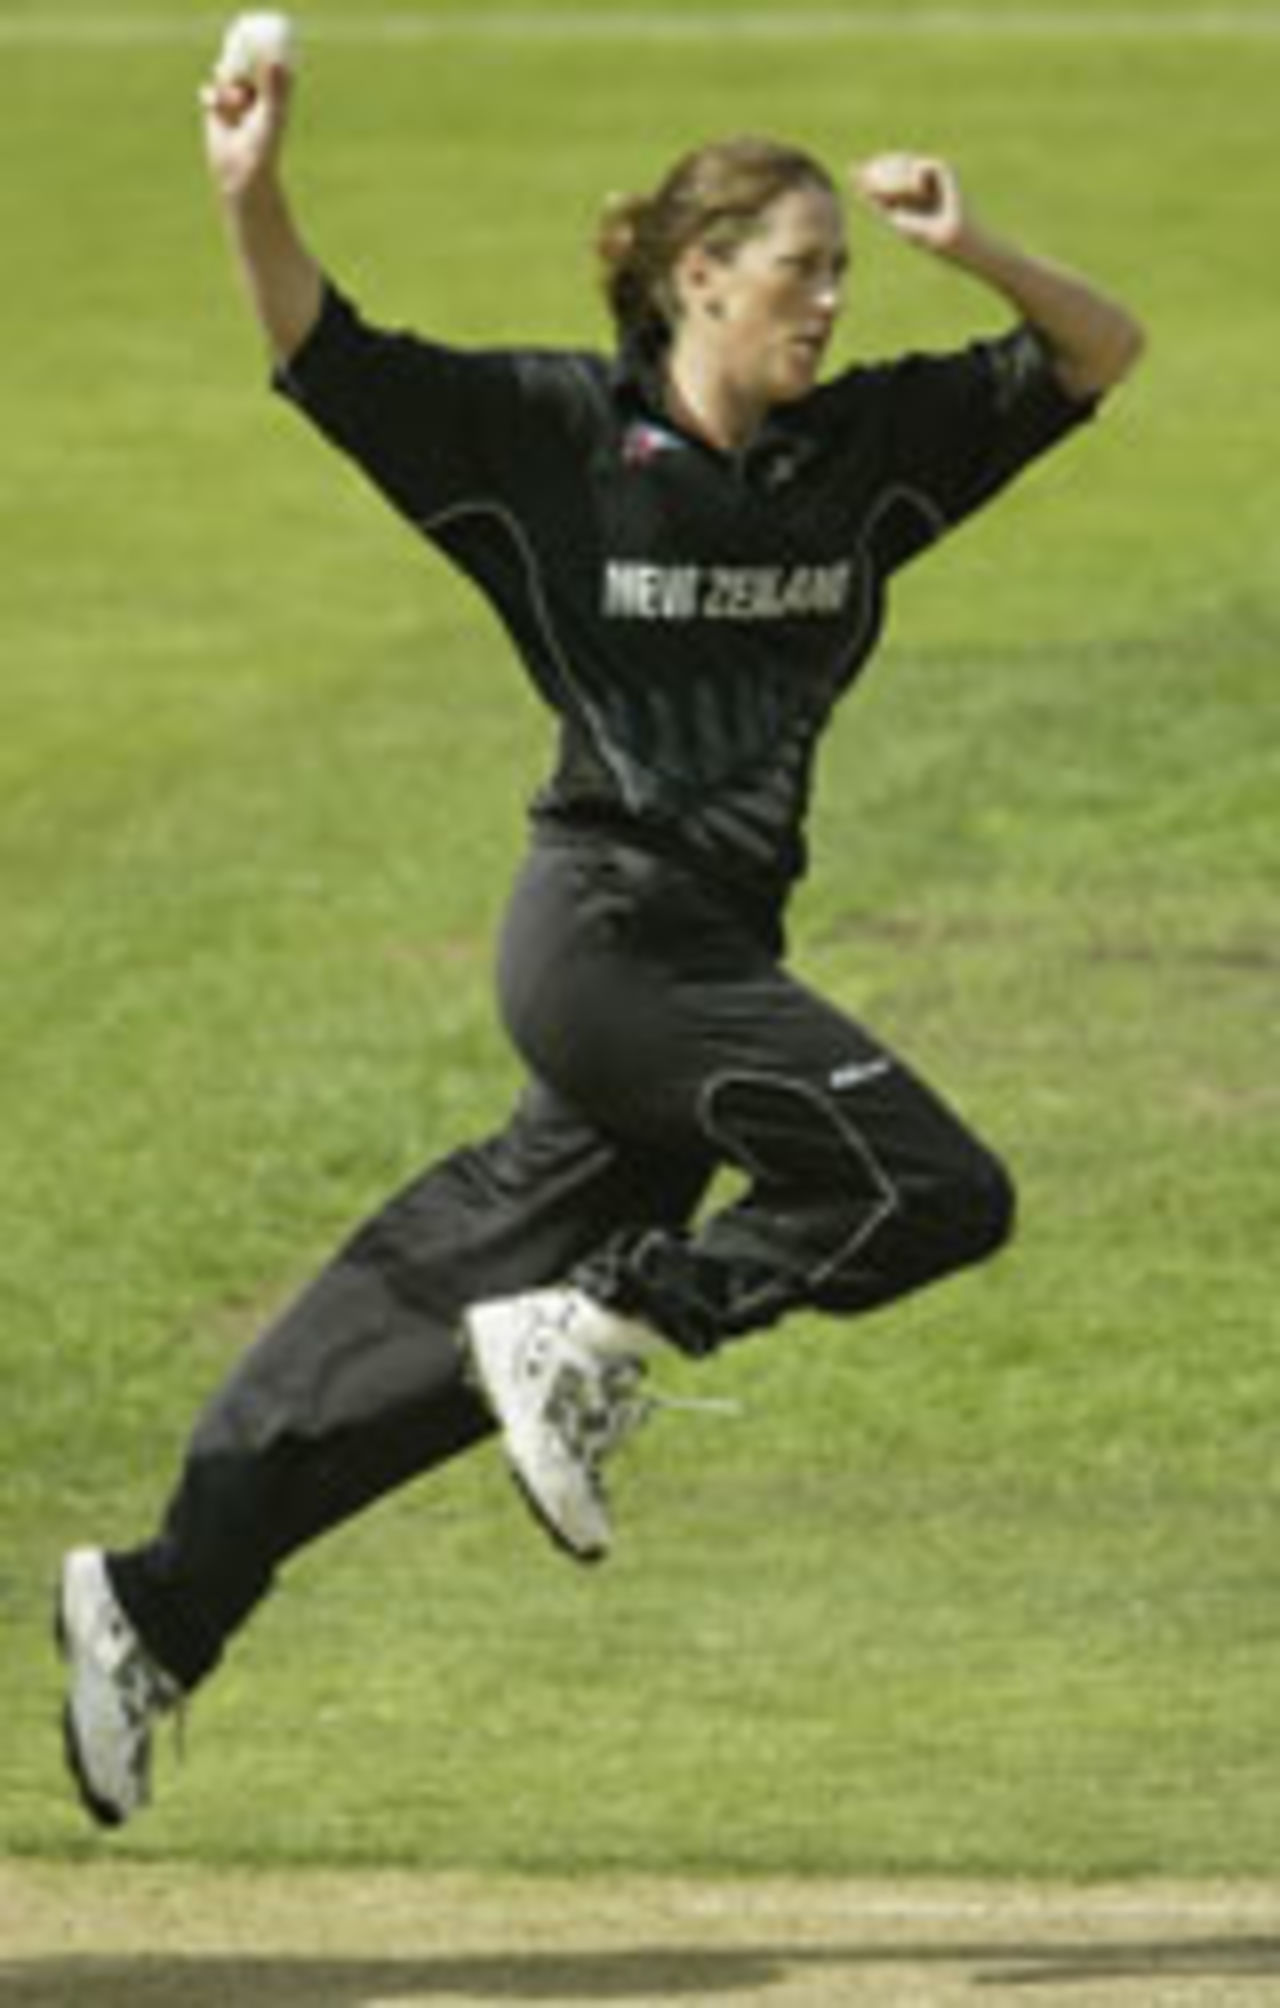 Helen Watson bowling, New Zealand v Australia, Bellerive Oval, February 27, 2004